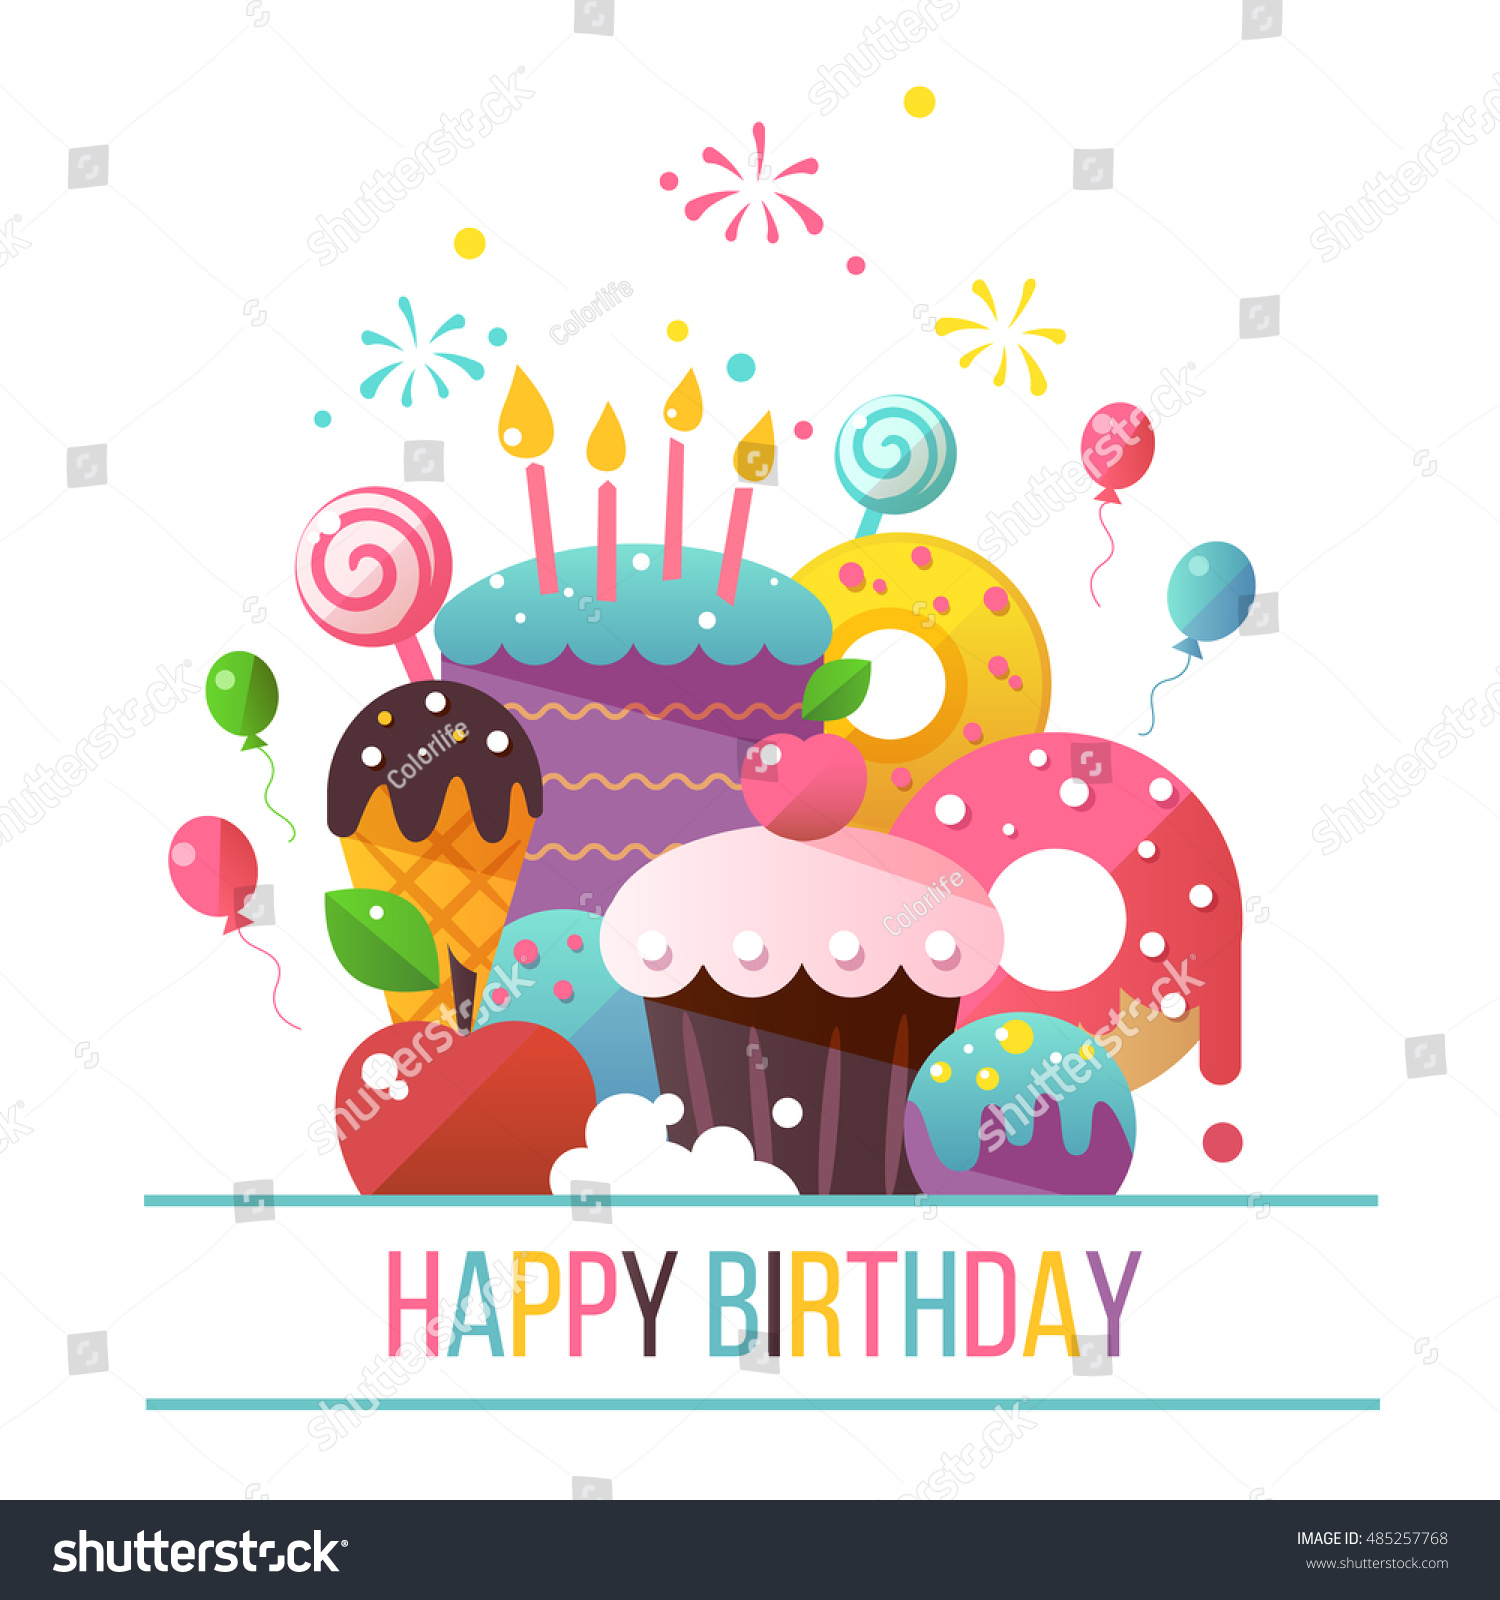 Download Happy Birthday Card Flat Design Vector Stock Vector ...